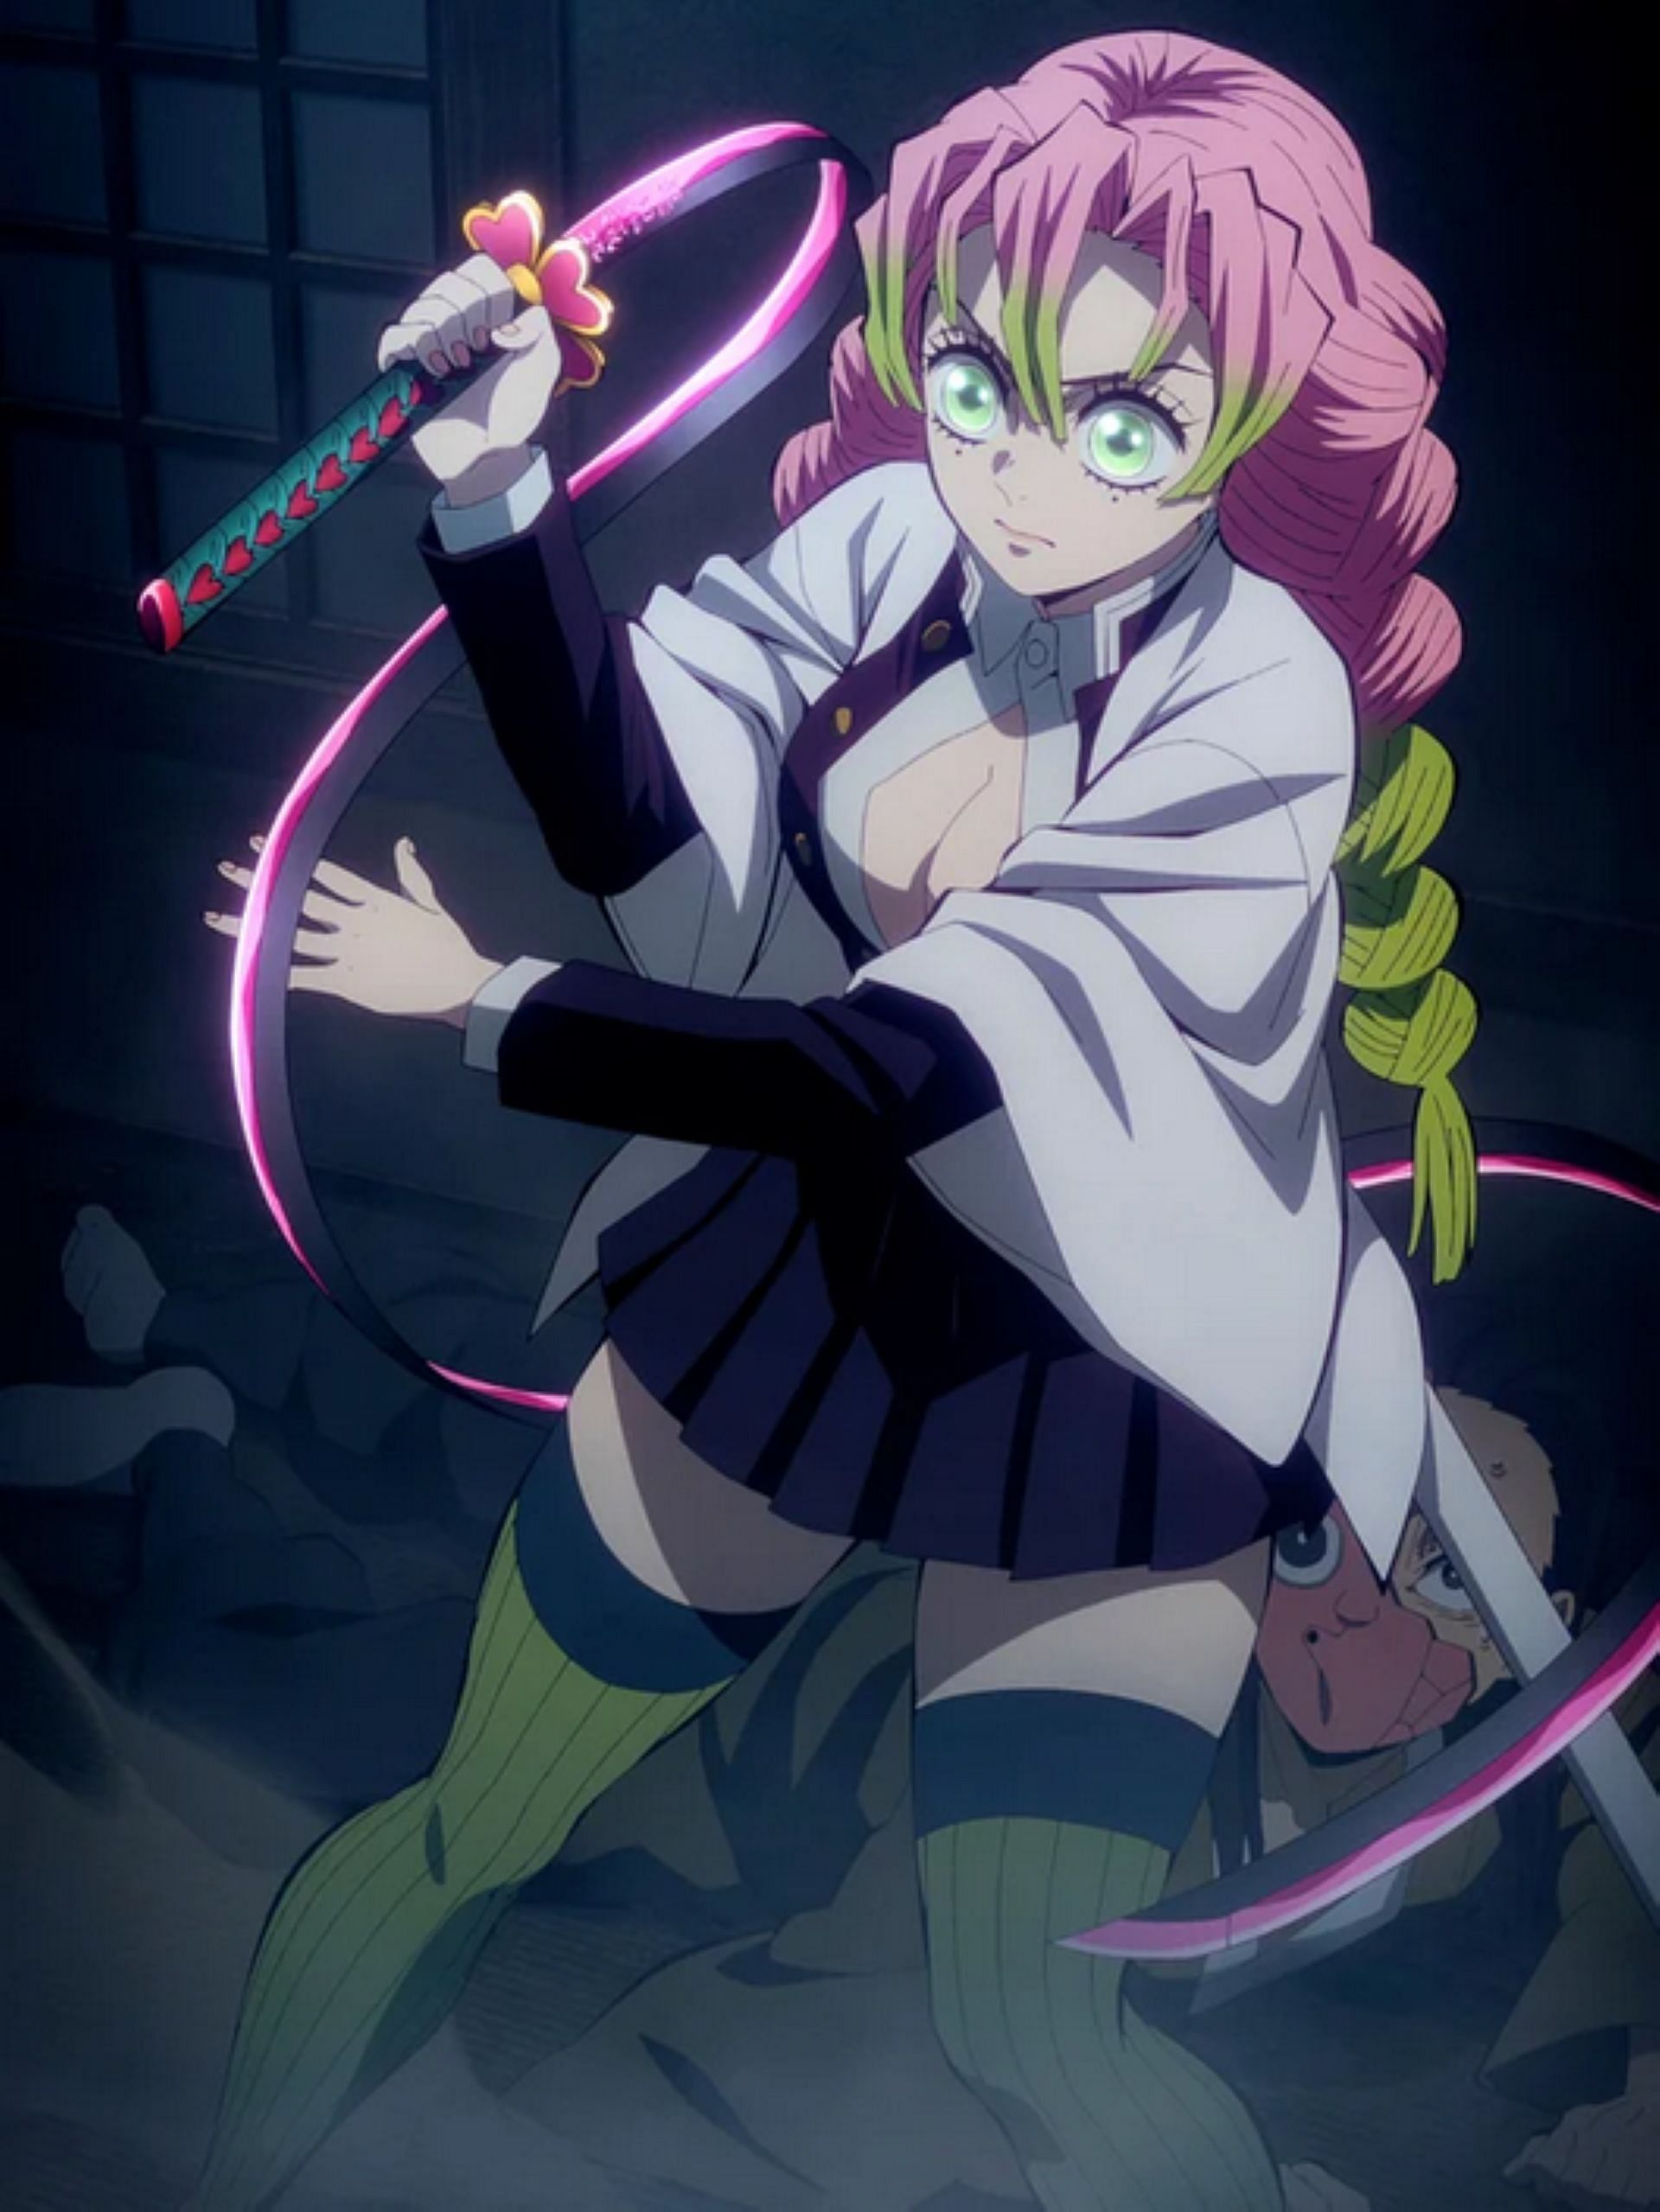 Mitsuri and her sword (Image via Ufotable)